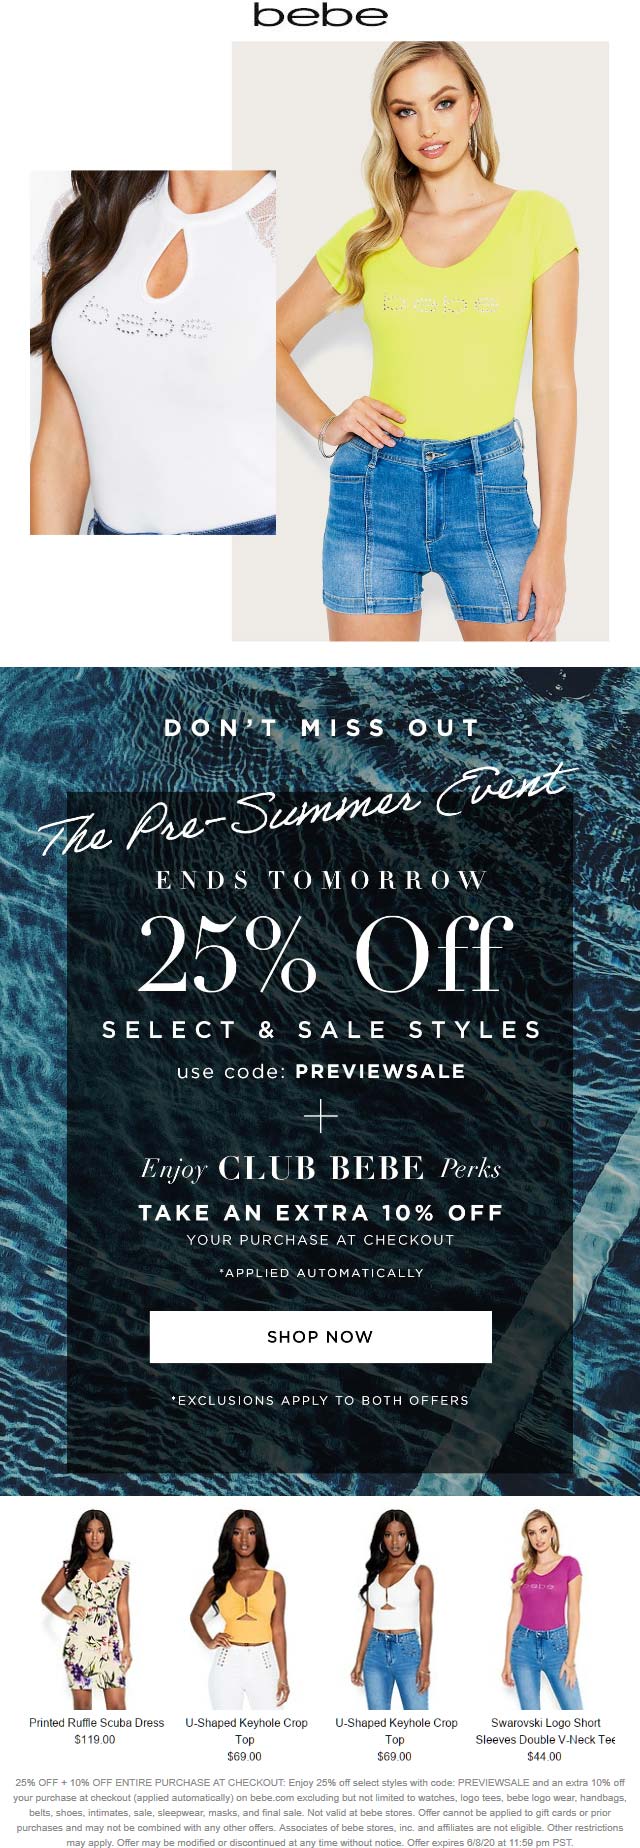 bebe stores Coupon  25% off at bebe via promo code PREVIEWSALE #bebe